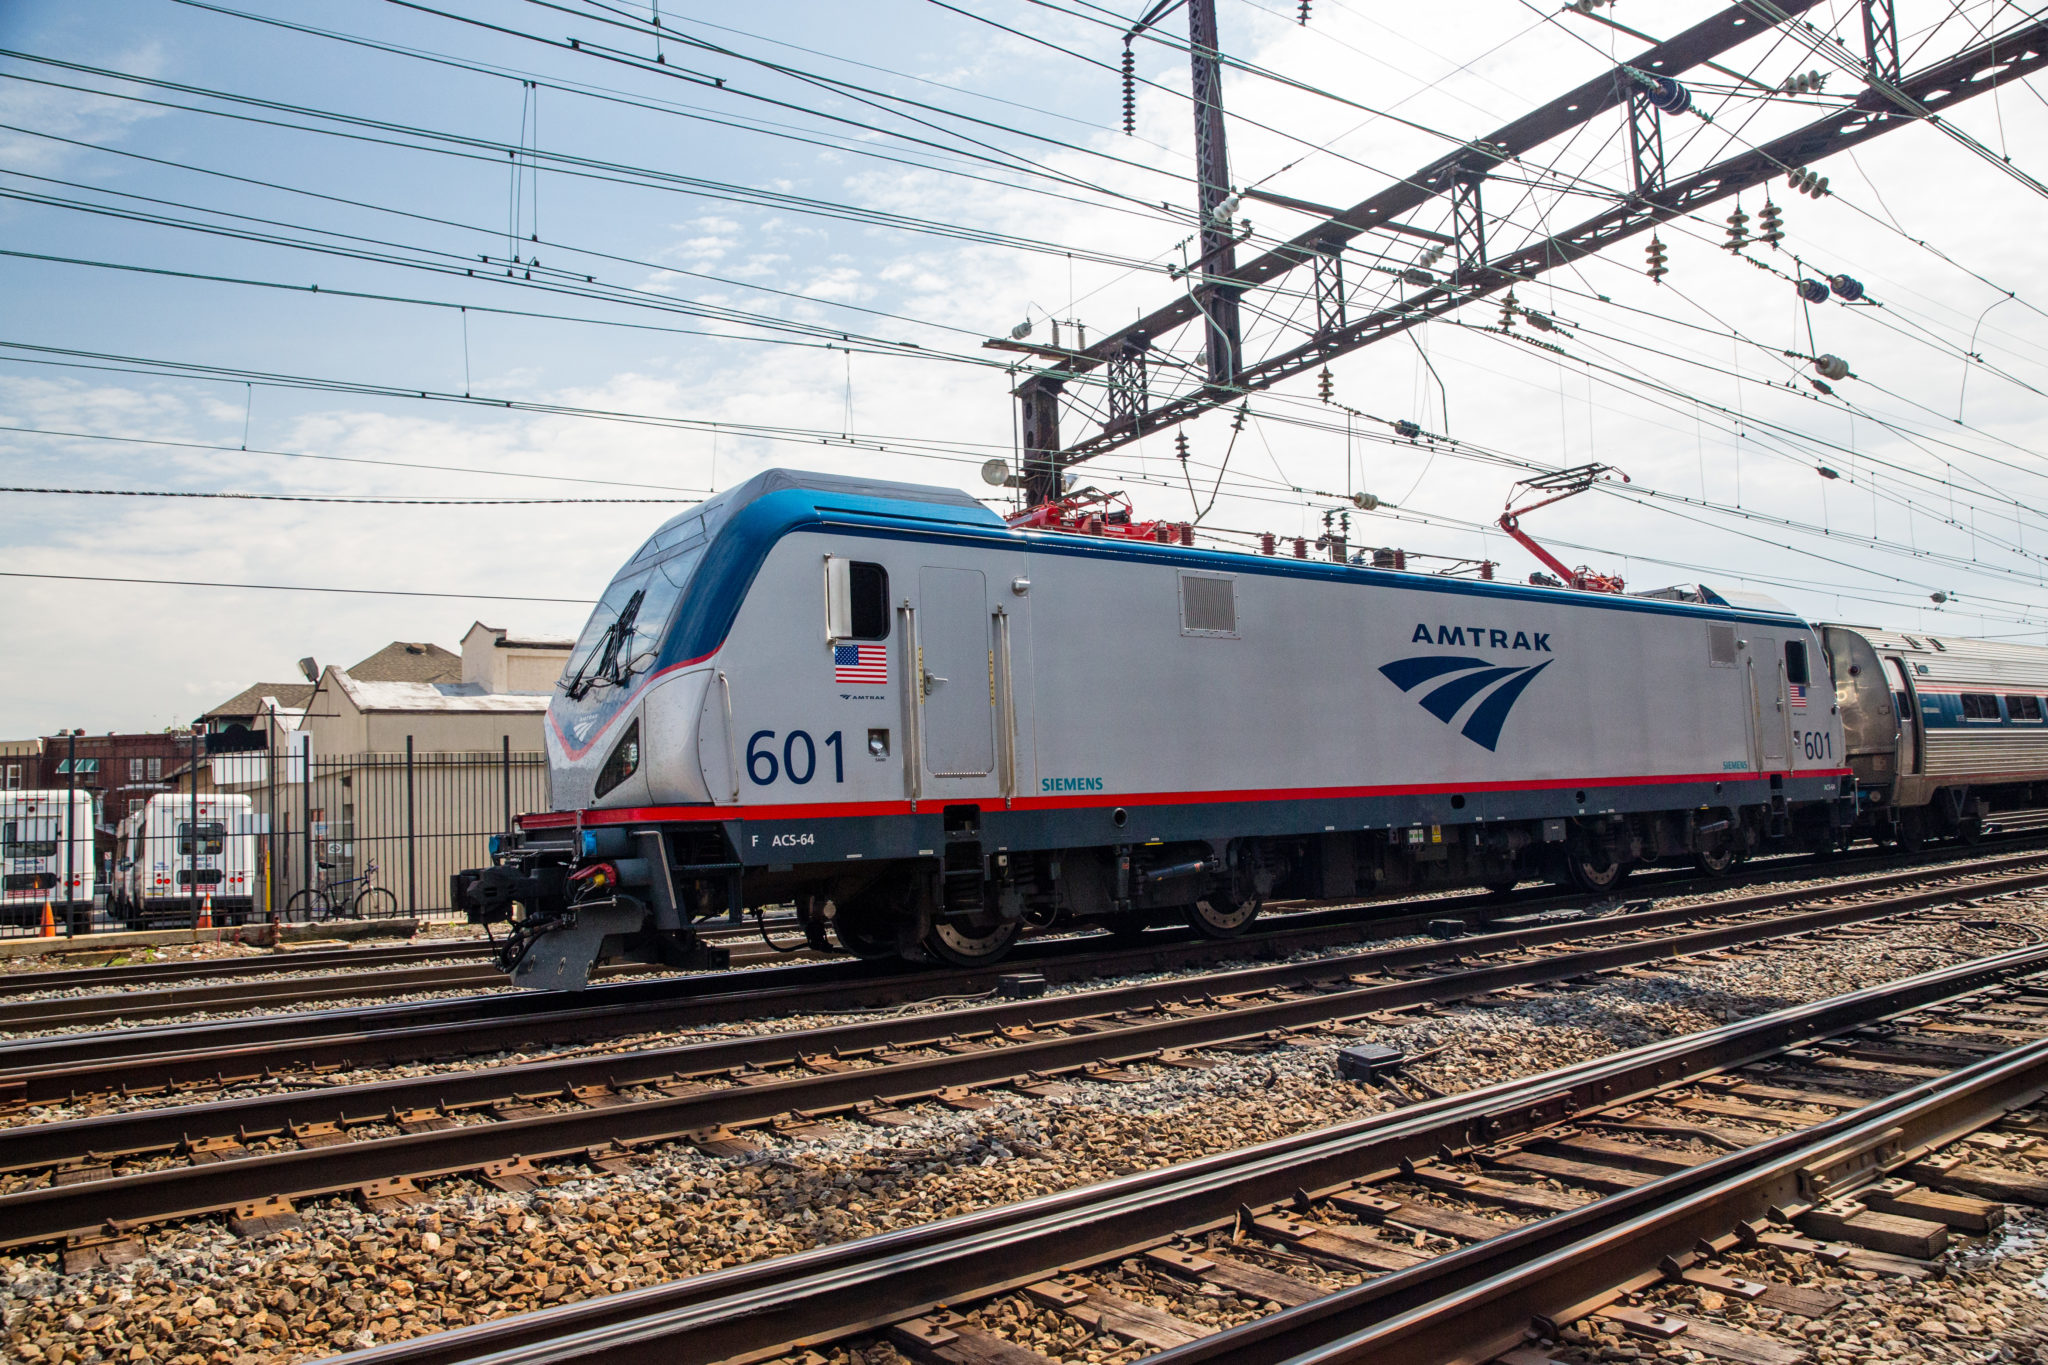 ACS-64 Locomotives Usher in New Era of Mobility on Northeast Corridor